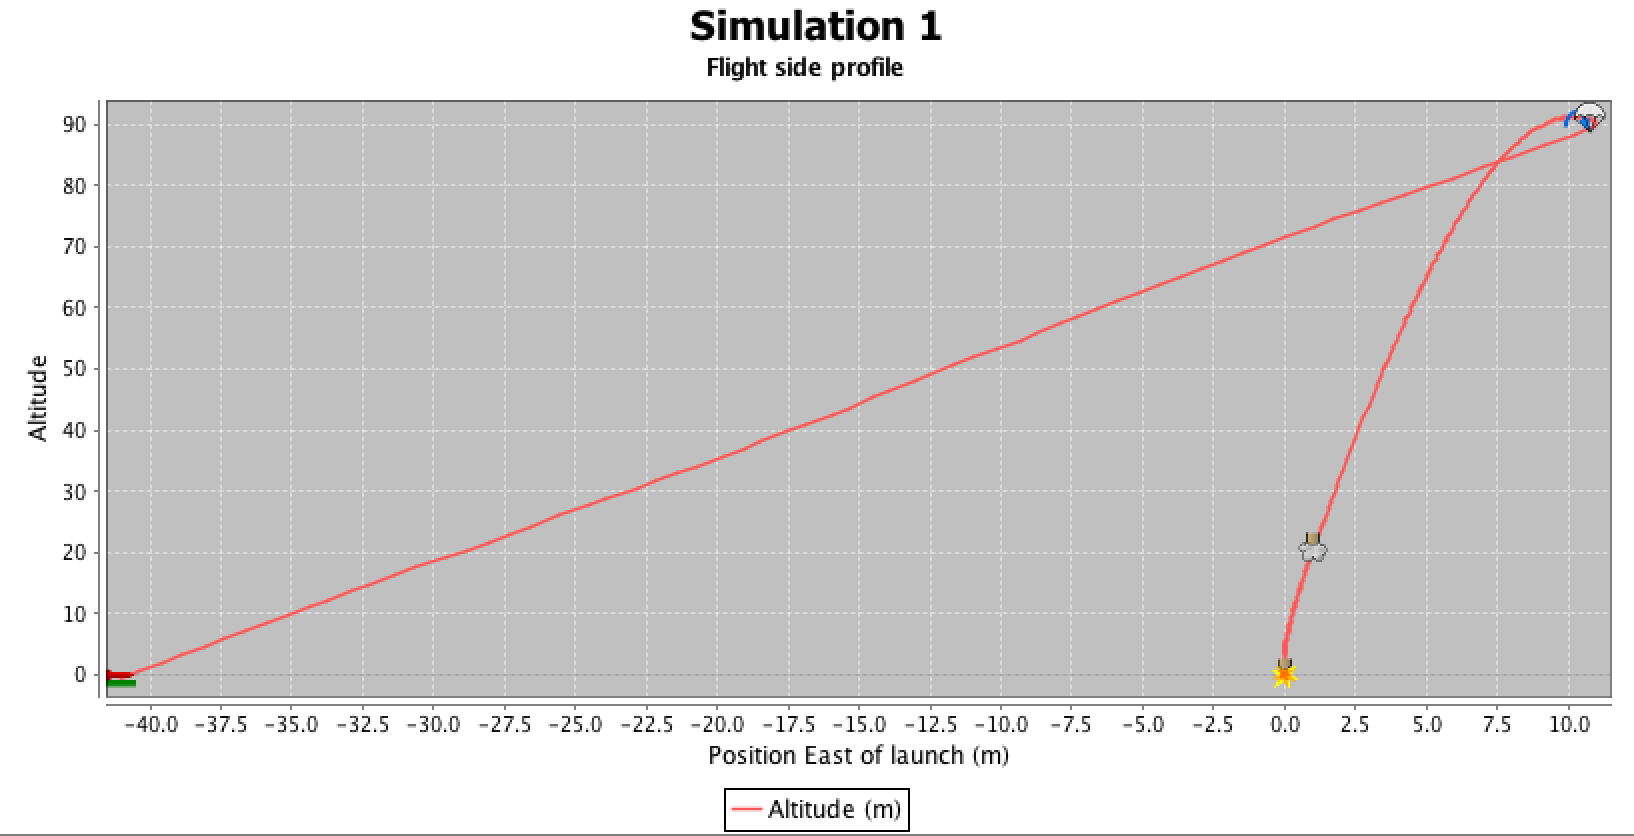 Simulation results